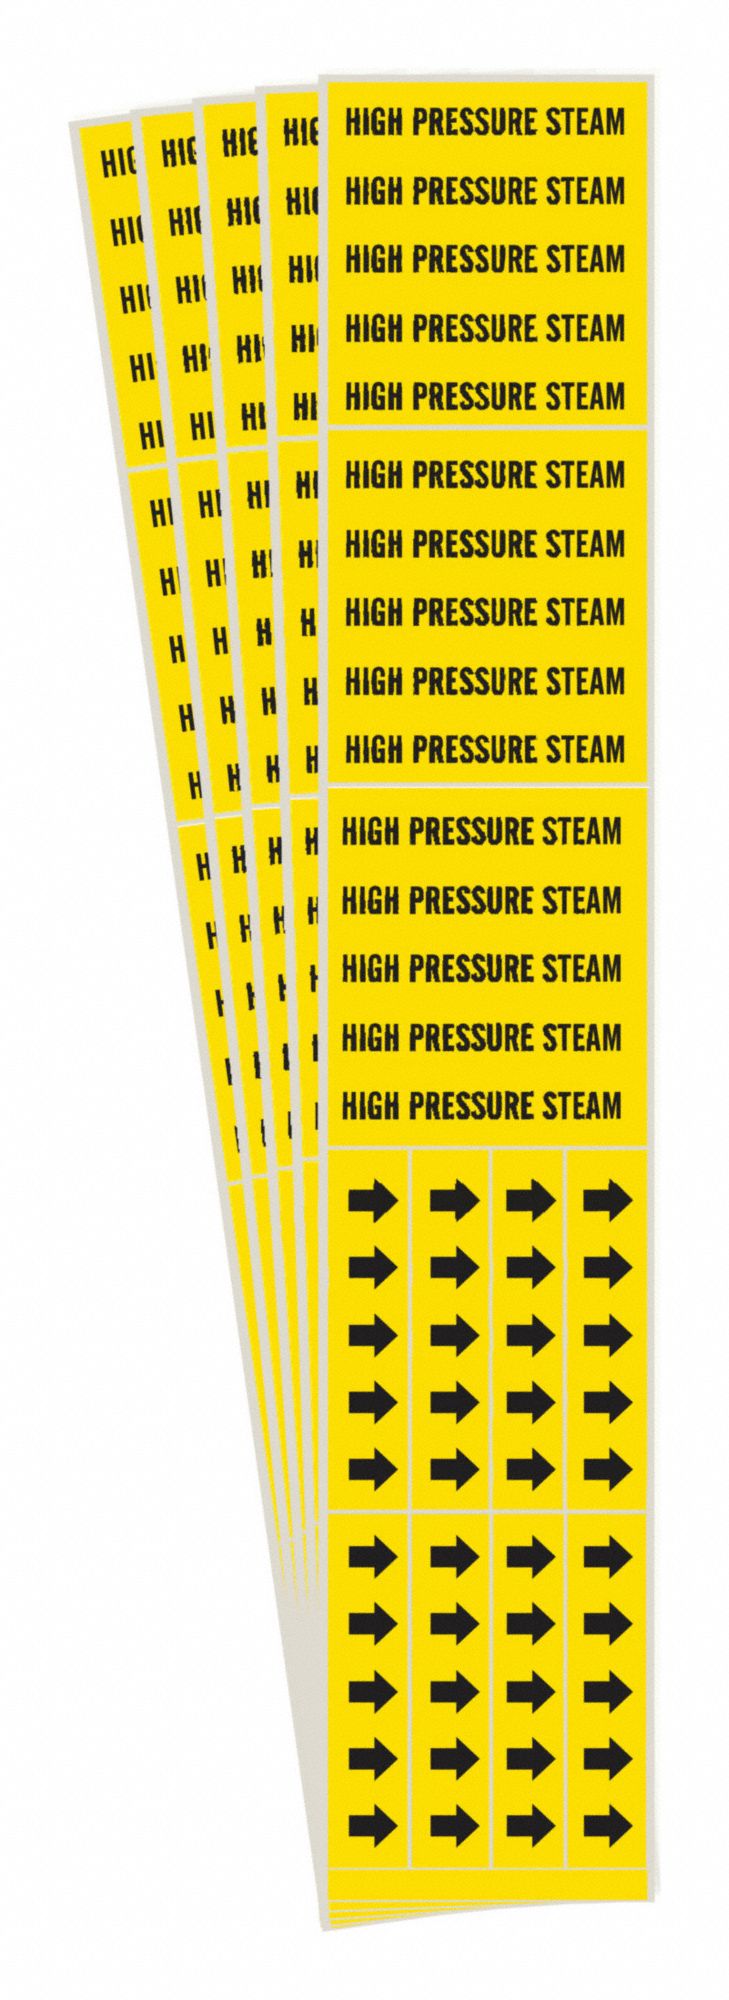 B-946 Legend High Pressure Gas 2 1/4 Height X 2 3/4 Width Legend High Pressure Gas Black On Yellow Pressure Sensitive Vinyl Brady 7138-3C Self-Sticking Vinyl Pipe Marker 2 1/4 Height X 2 3/4 Width